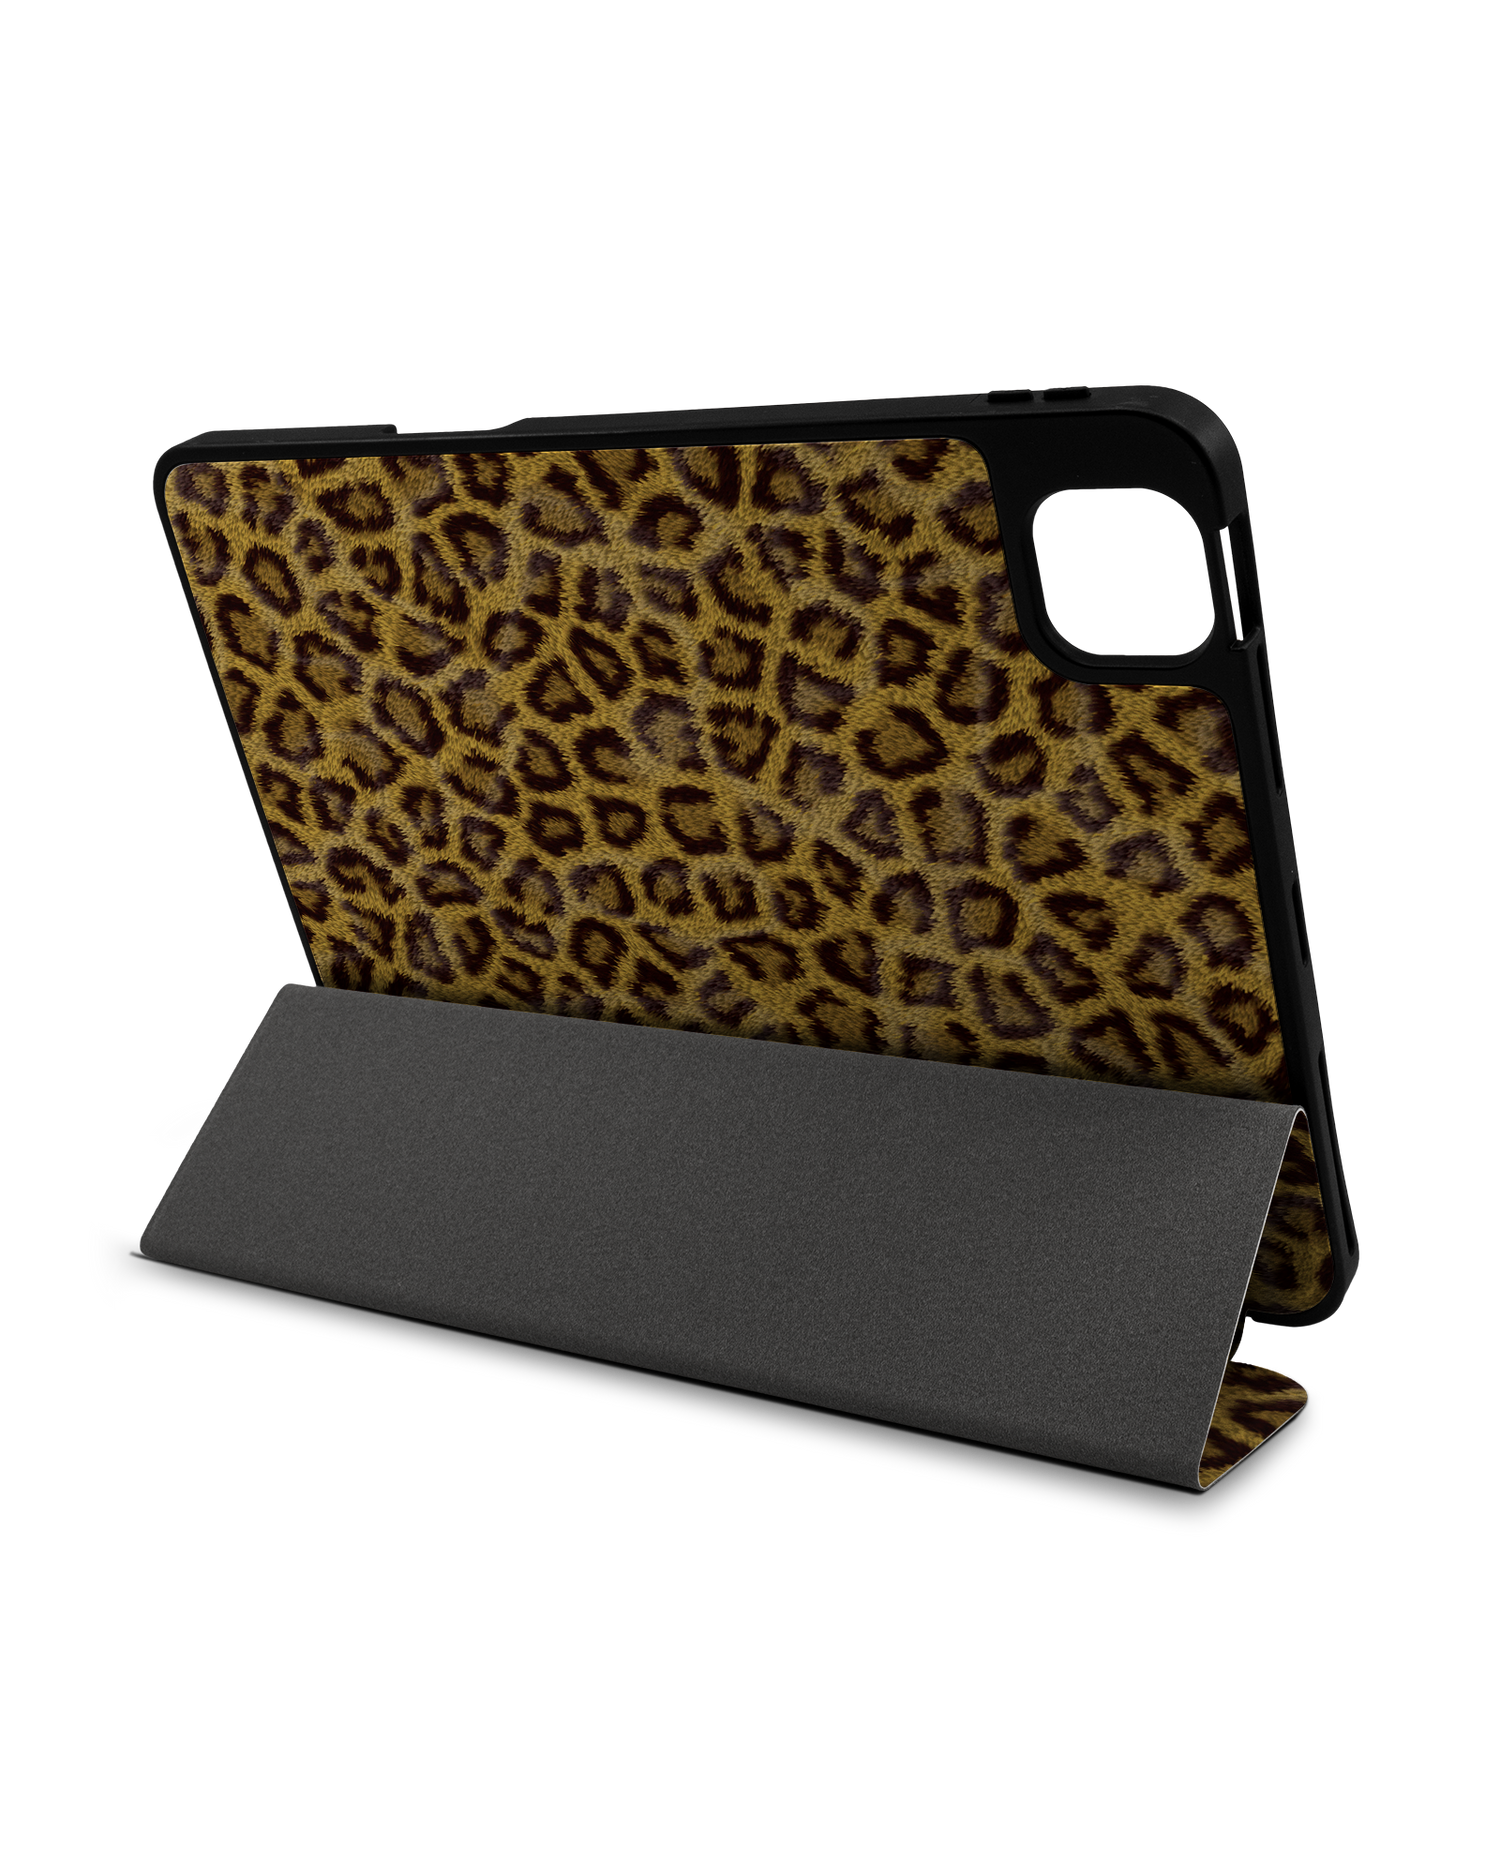 Leopard Skin iPad Case with Pencil Holder Apple iPad Pro 11